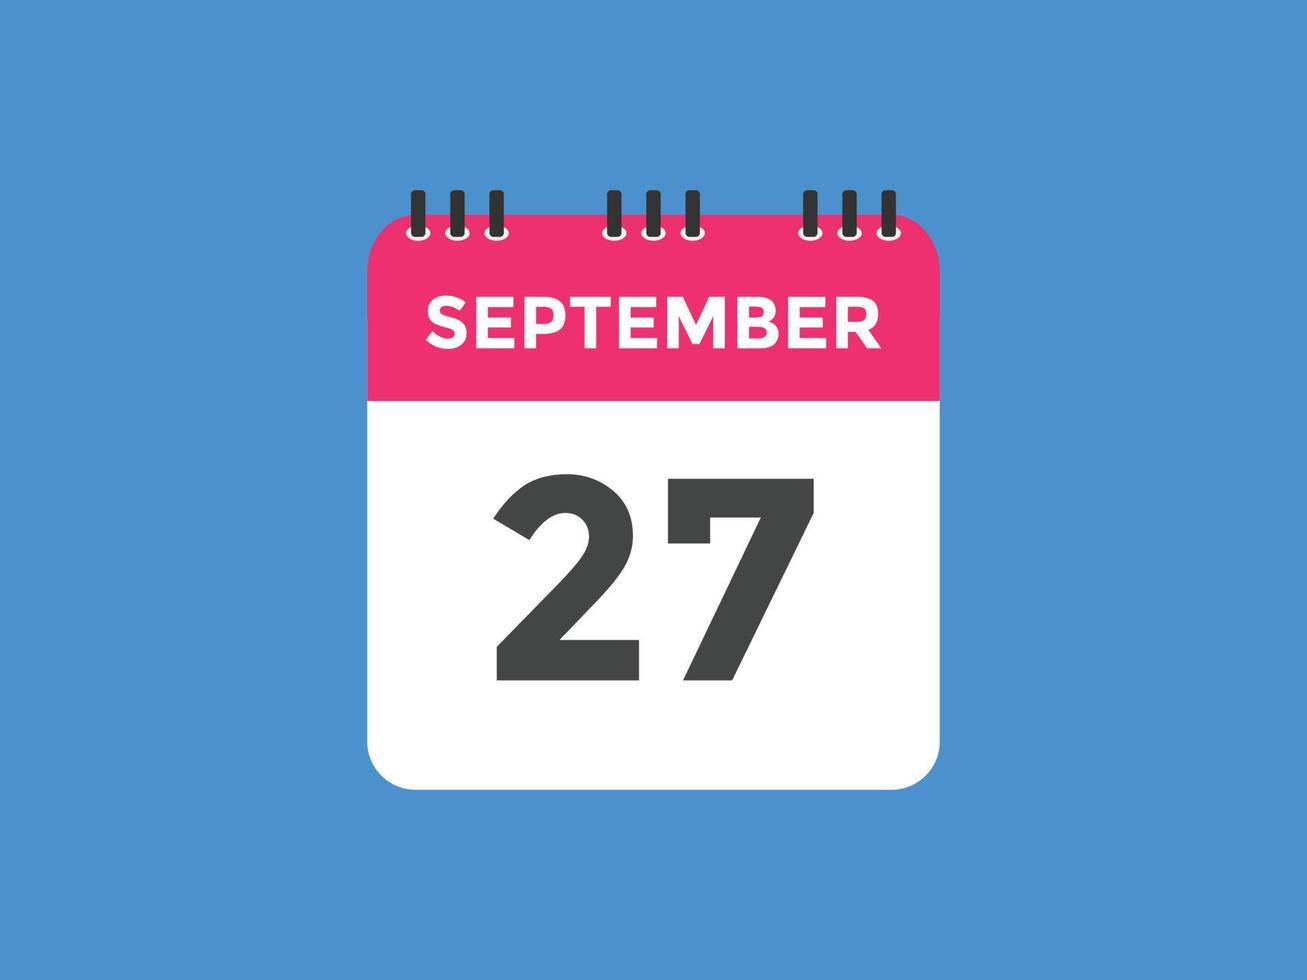 september 27 calendar reminder. 27th september daily calendar icon template. Calendar 27th september icon Design template. Vector illustration